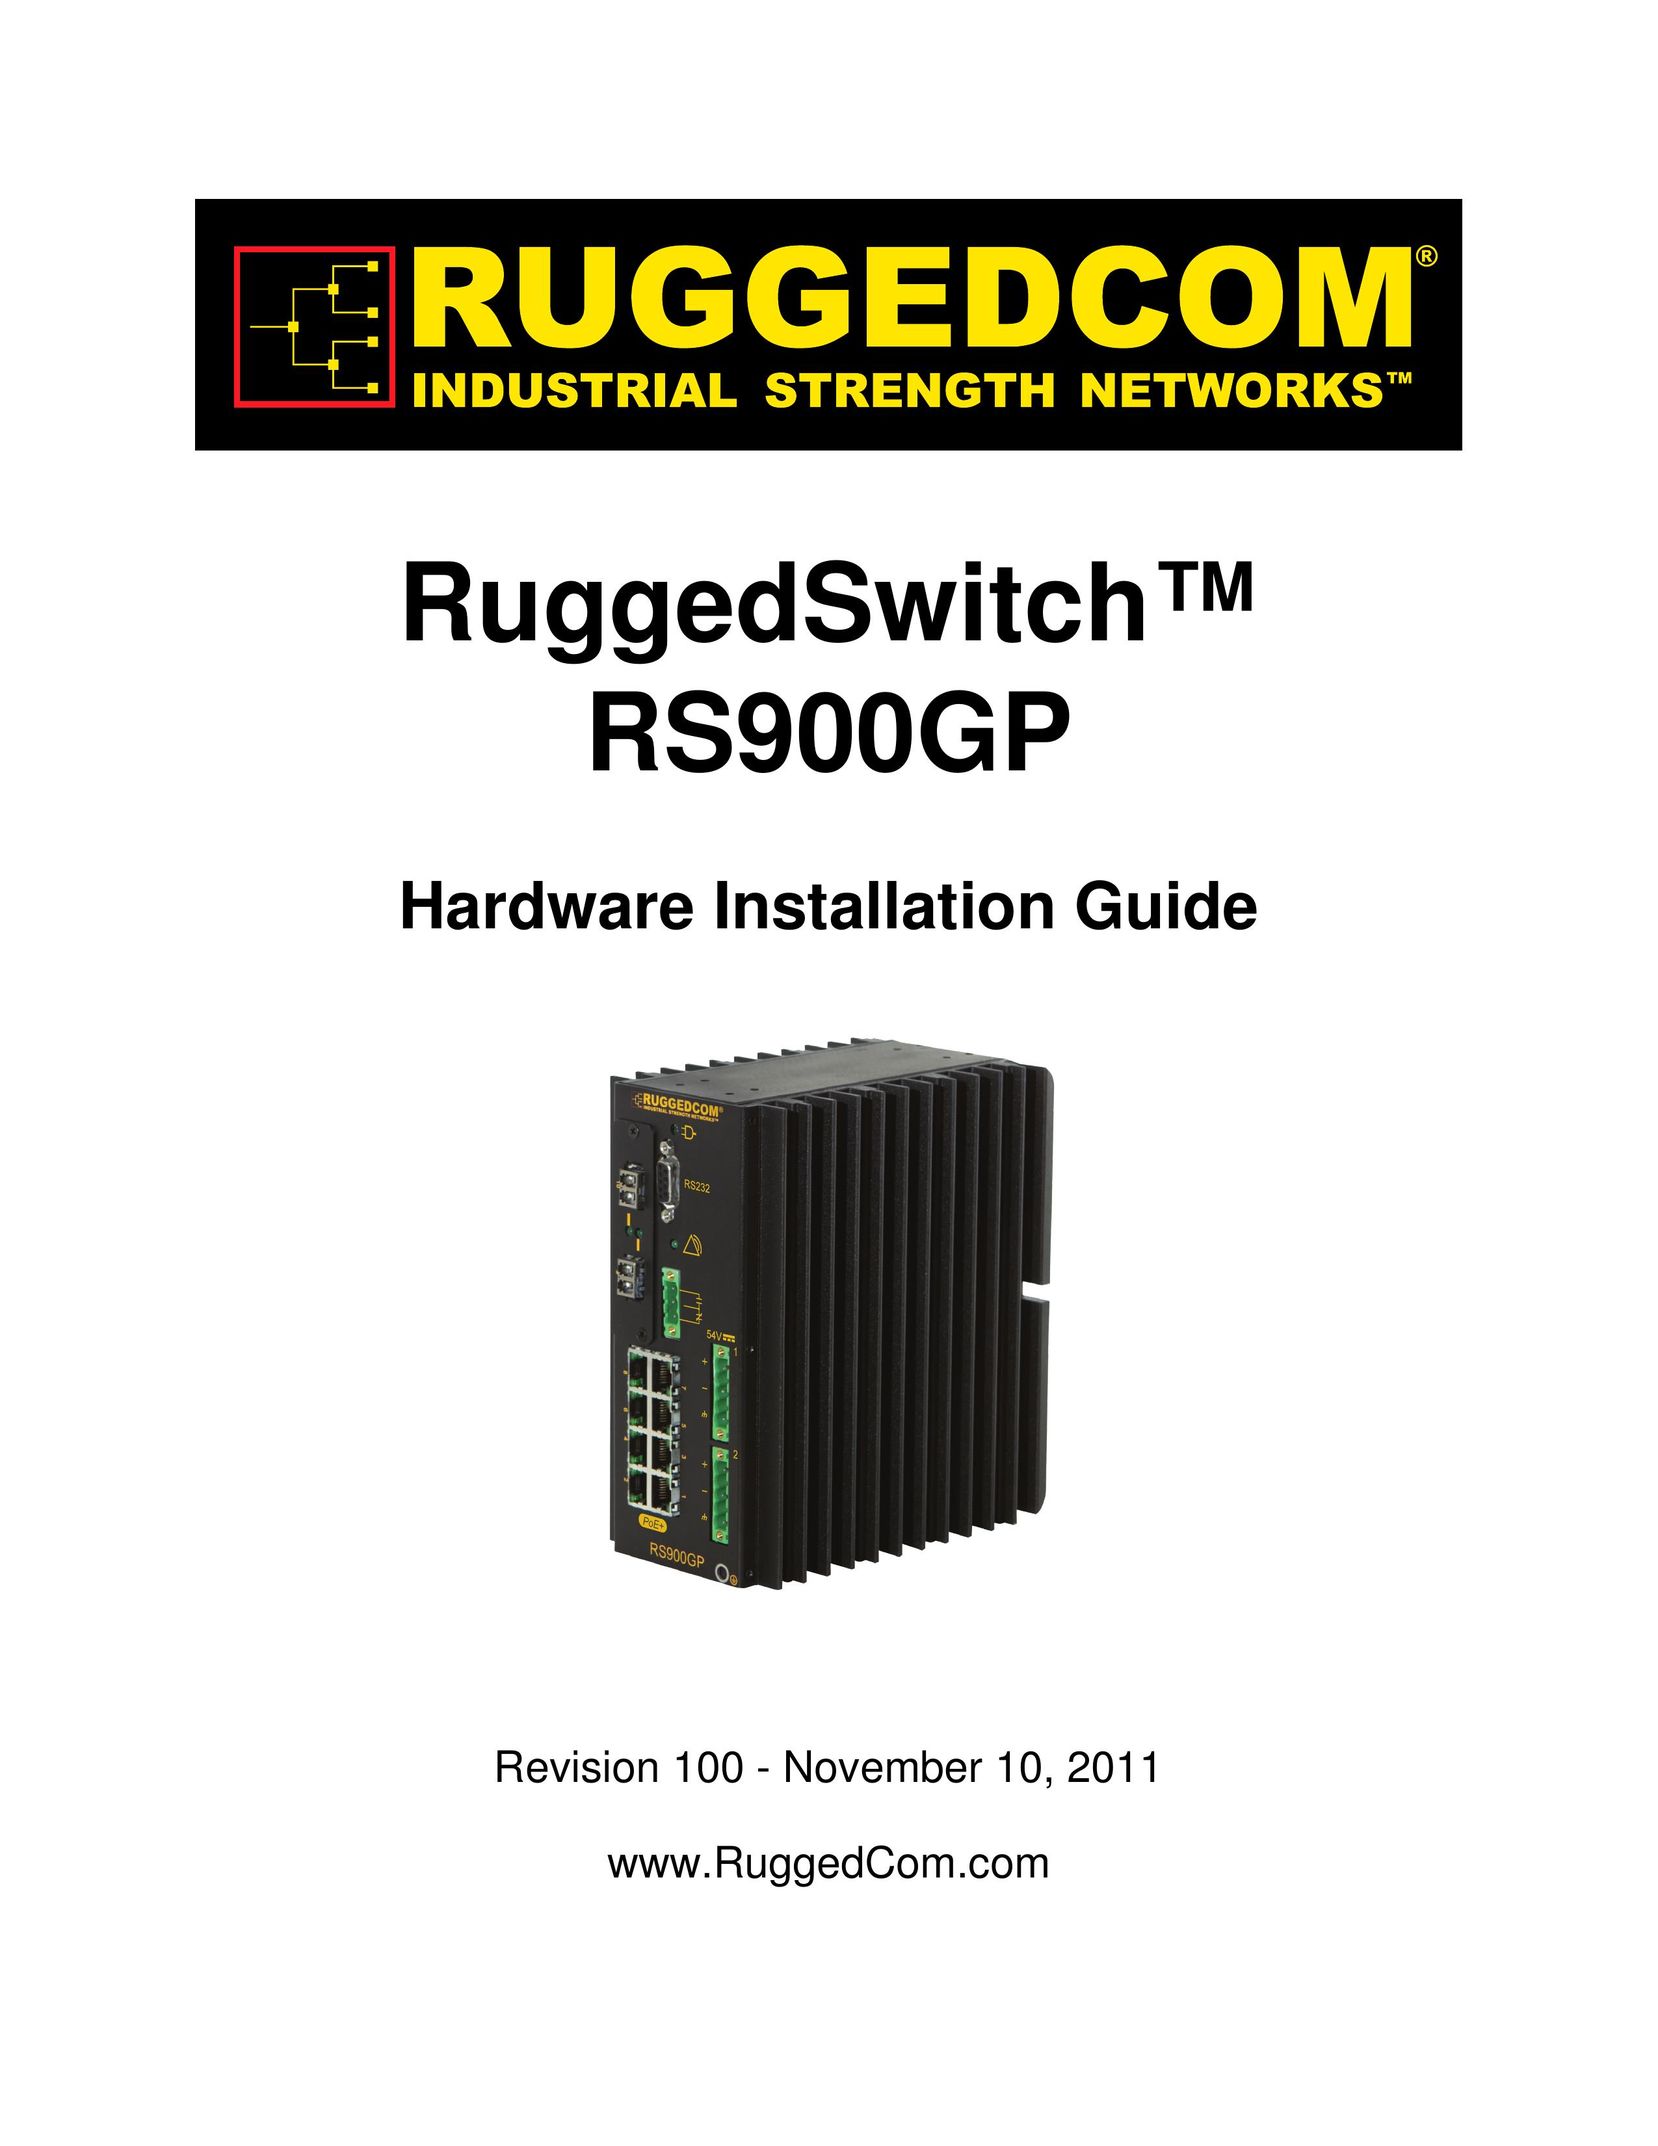 RuggedCom RS900GP Switch User Manual